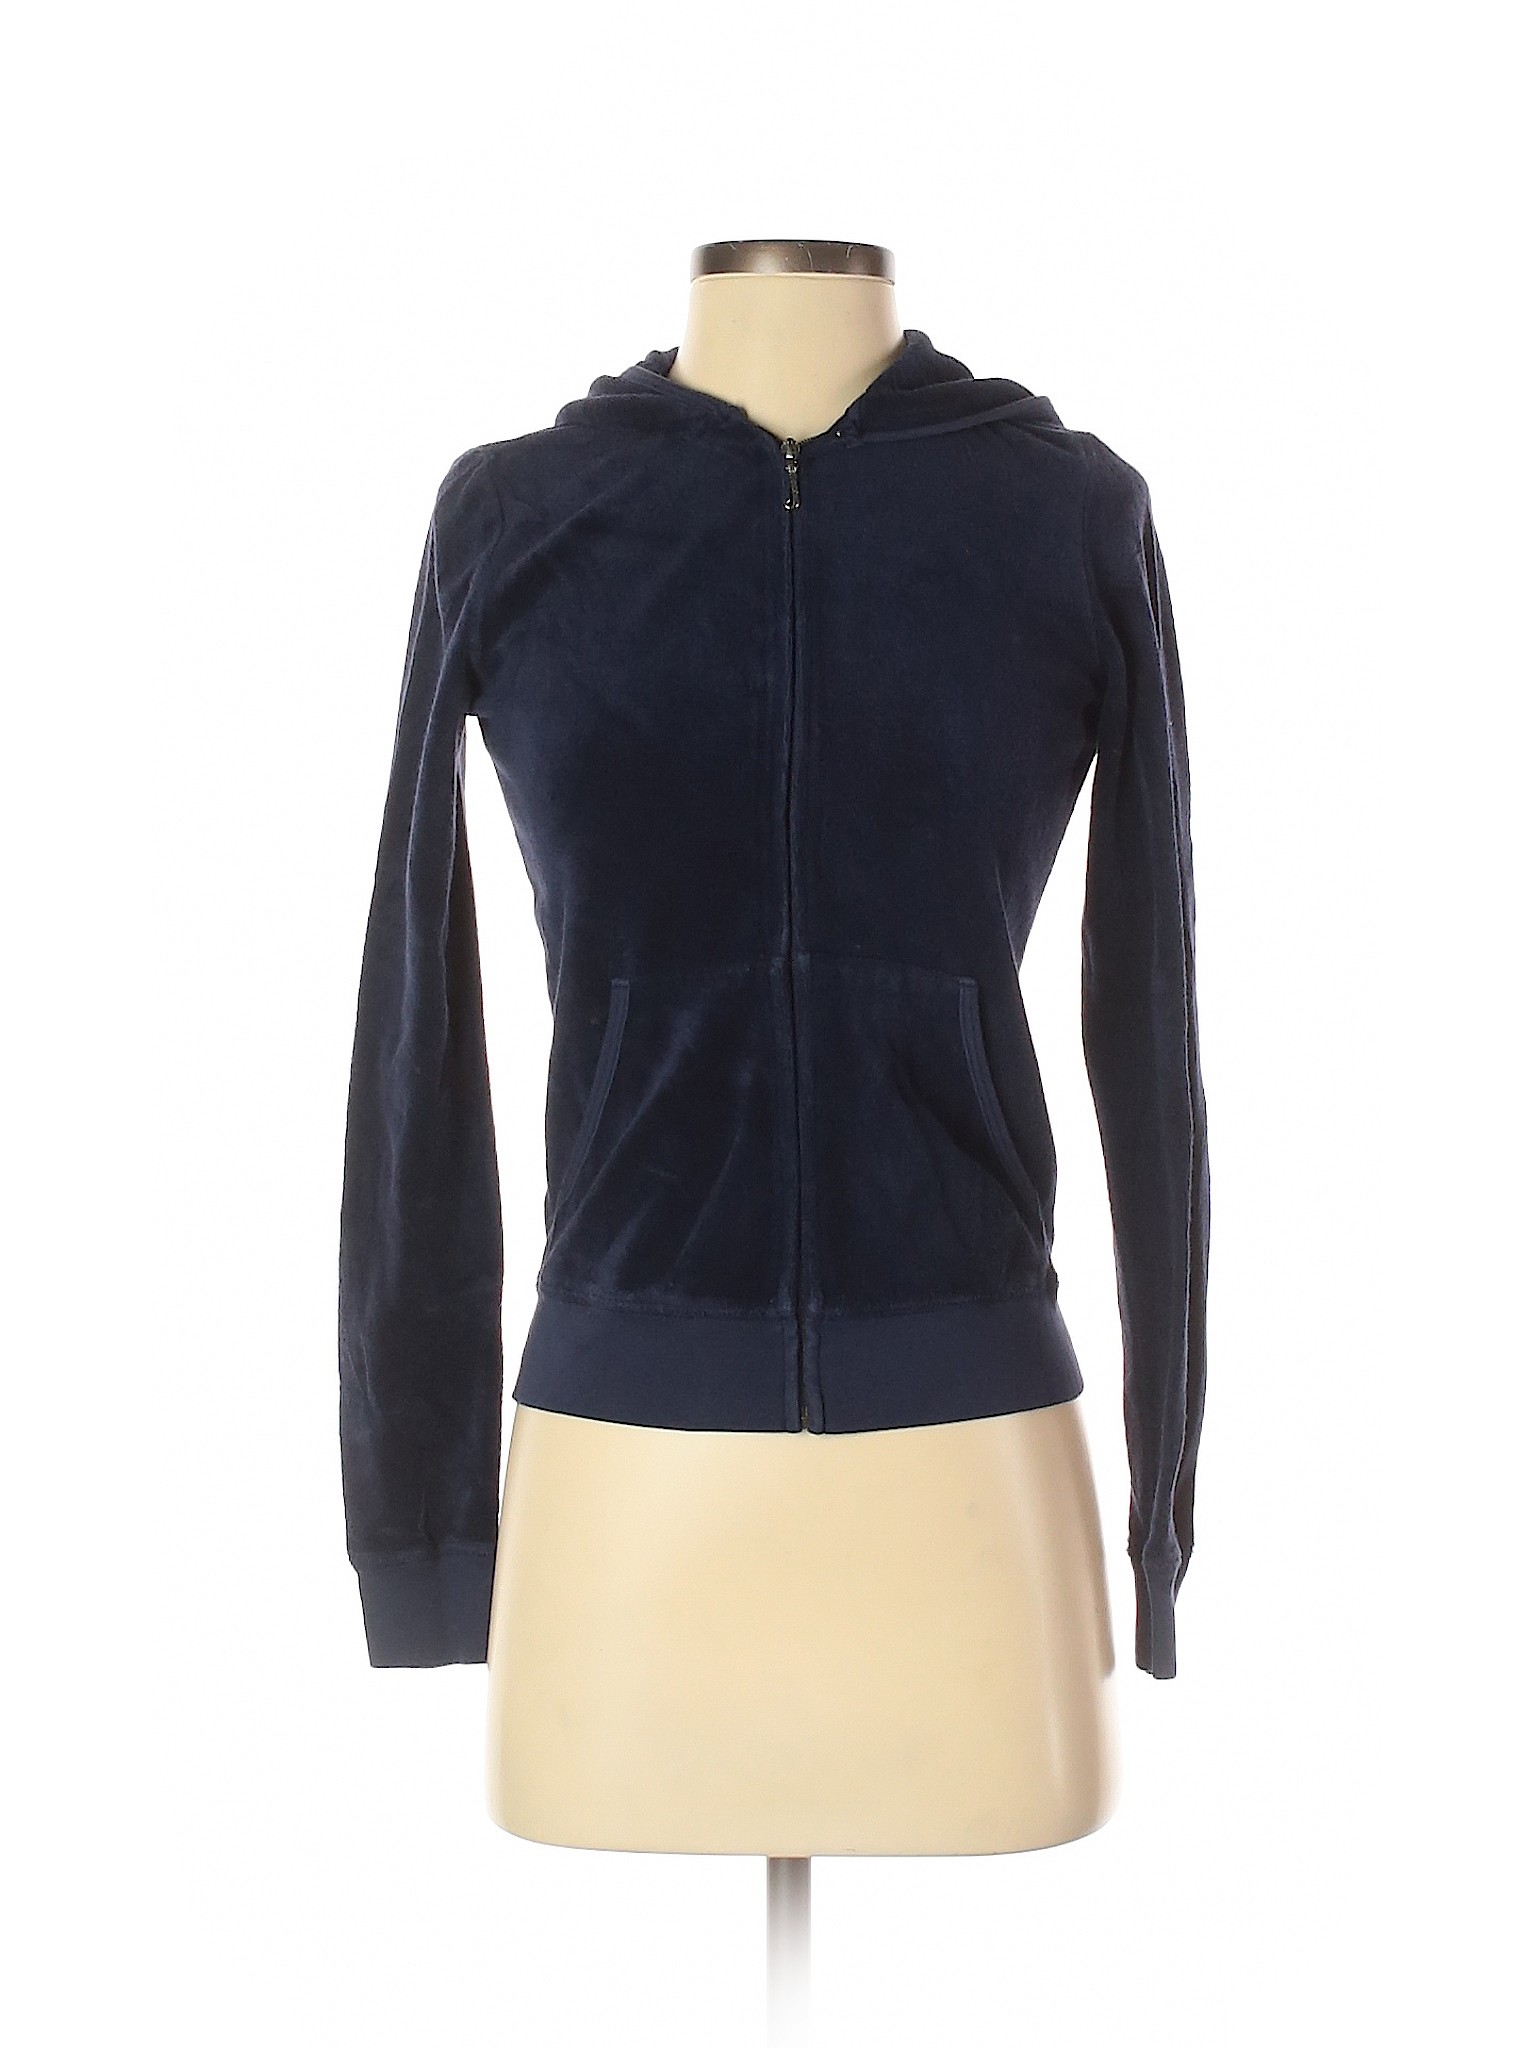 Juicy Couture Solid Blue Zip Up Hoodie Size S - 81% off | thredUP